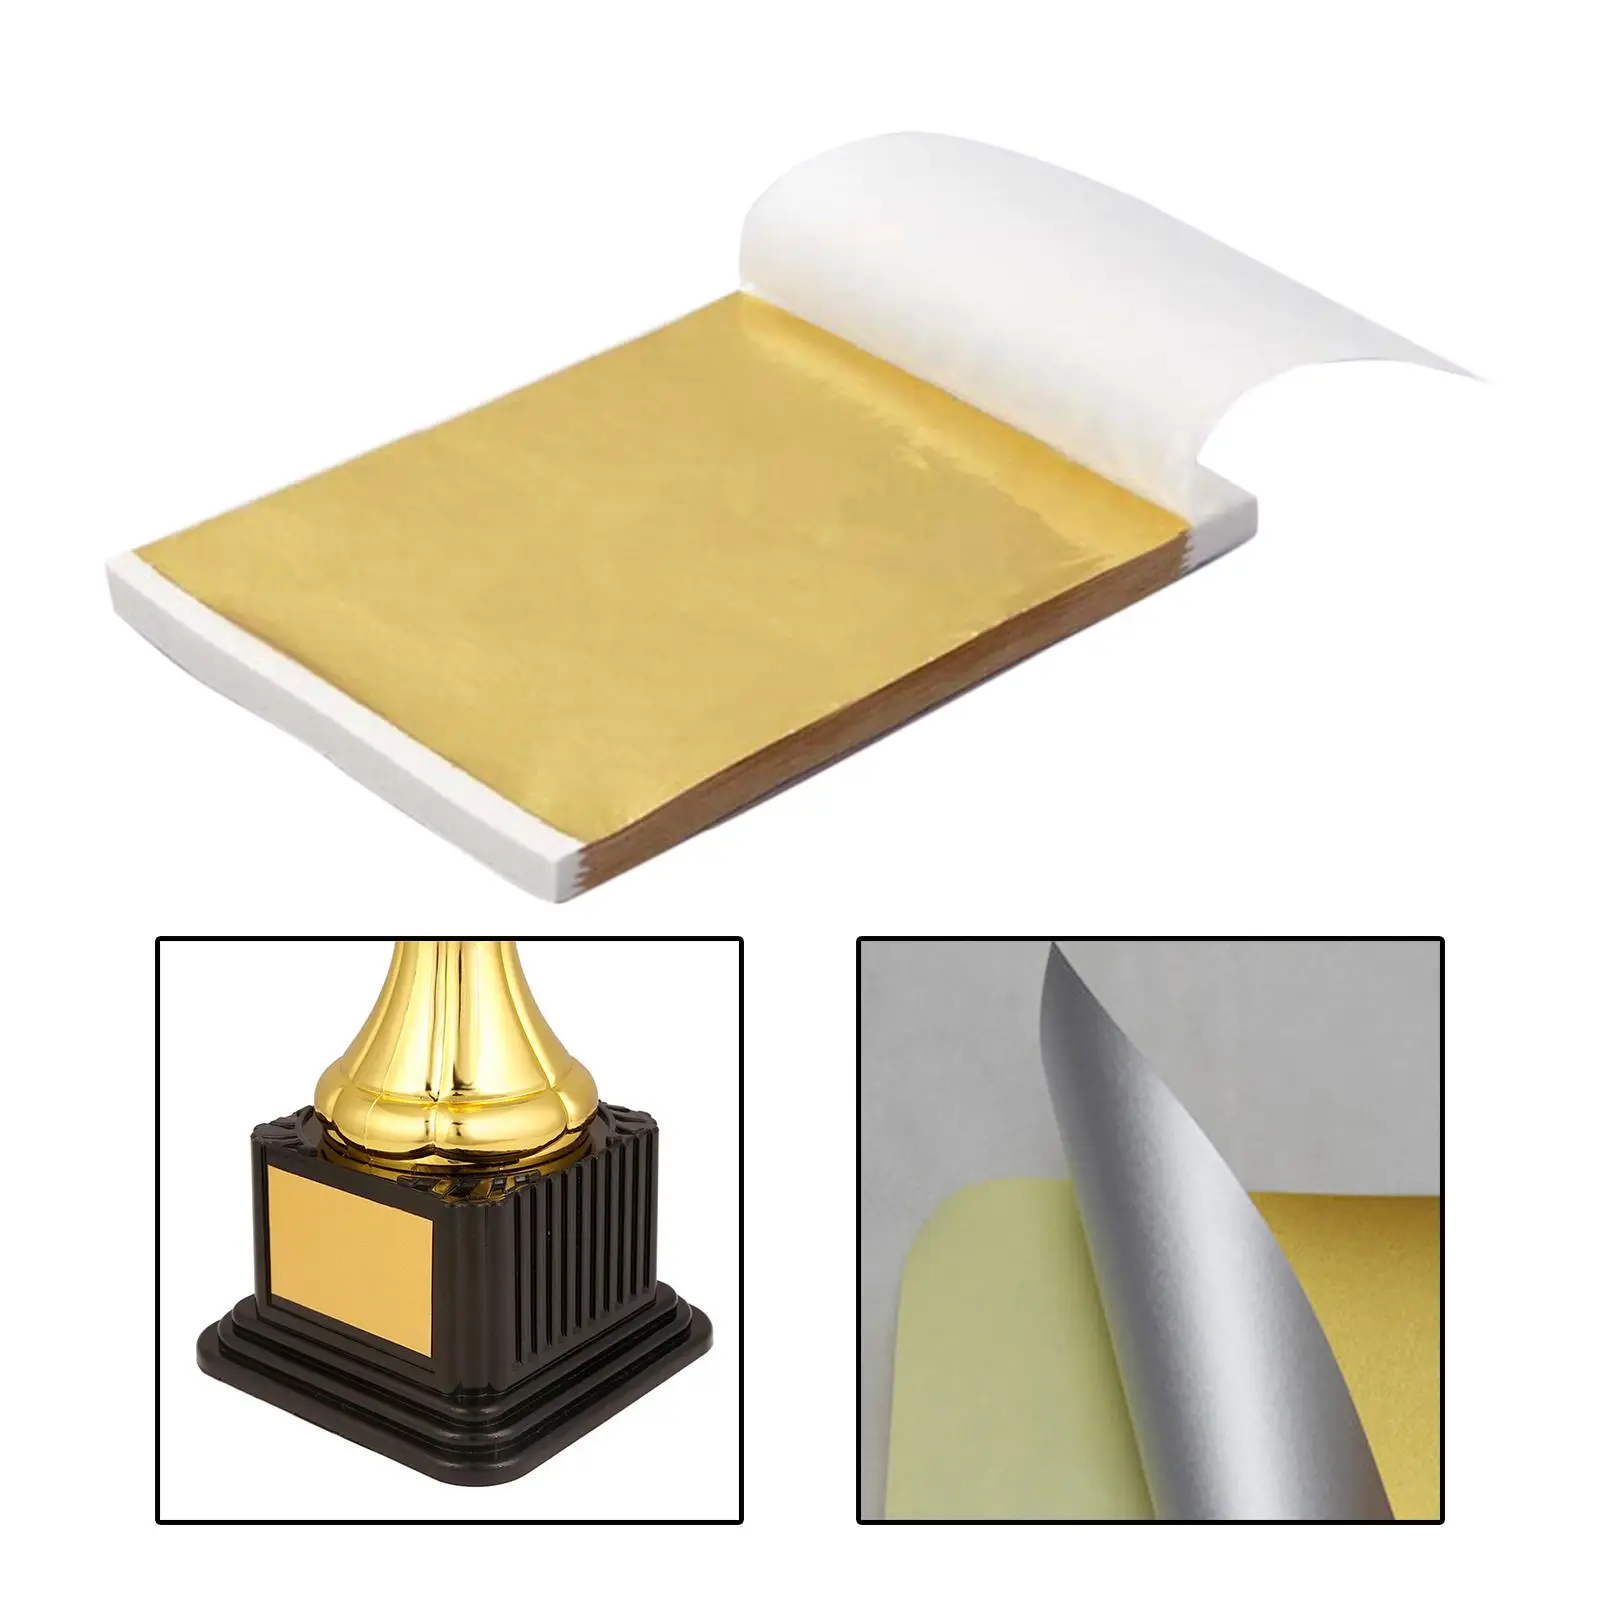 100x Gold Sheets Golden Aluminium Foil Candy Wrappers Foil Paper for Art Craft Work Makeup SPA Gift Basket Decoration